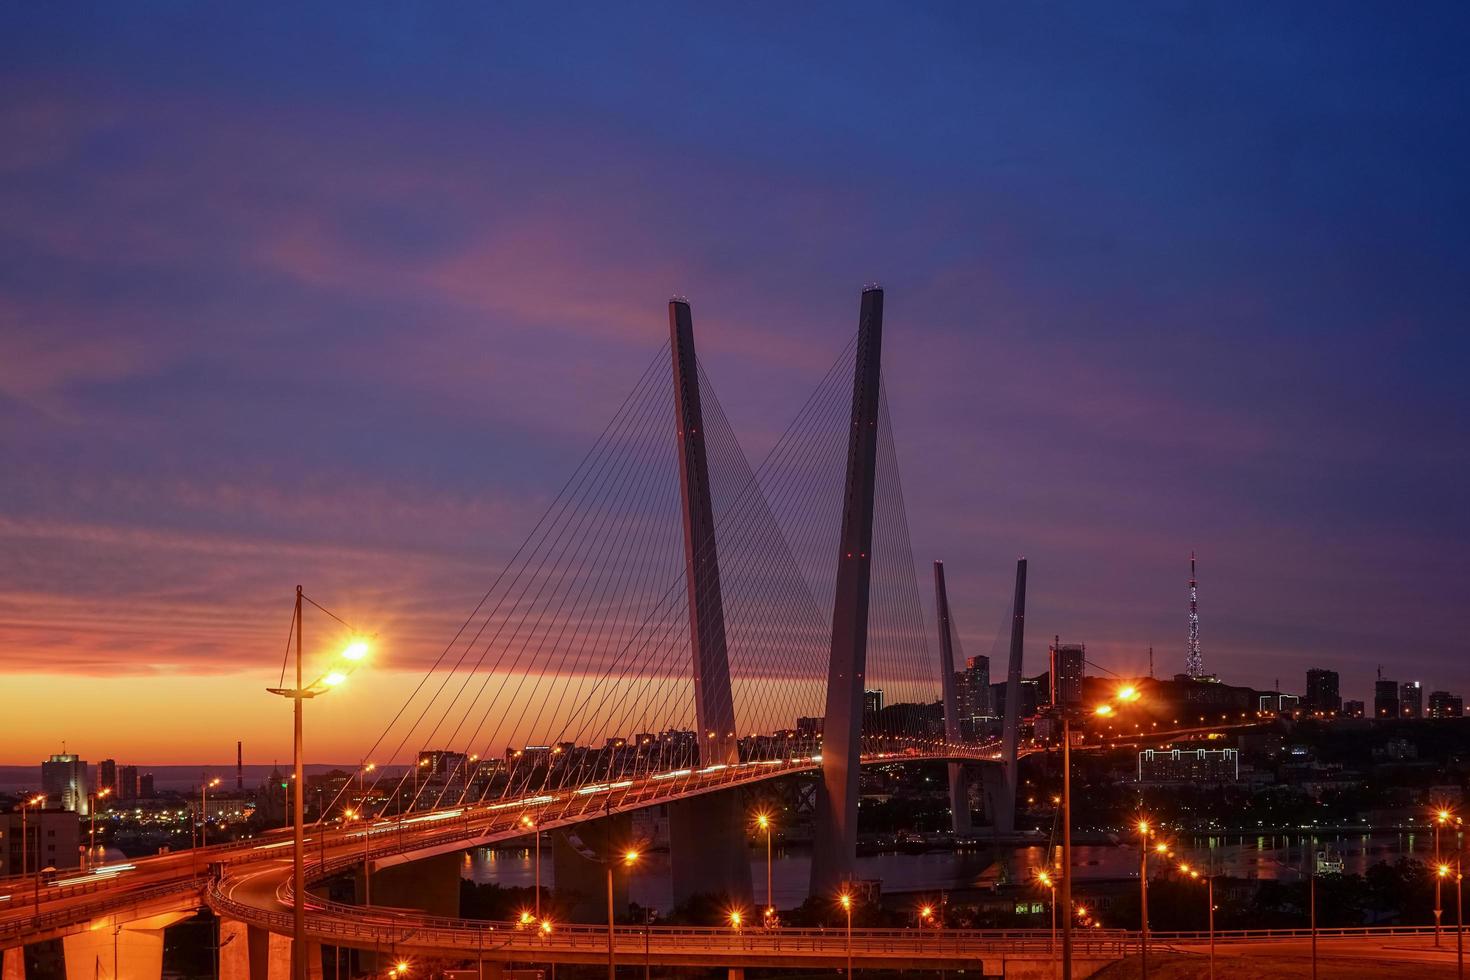 Golden bridge with colorful sunset sunset in Vladivostok, Russia photo